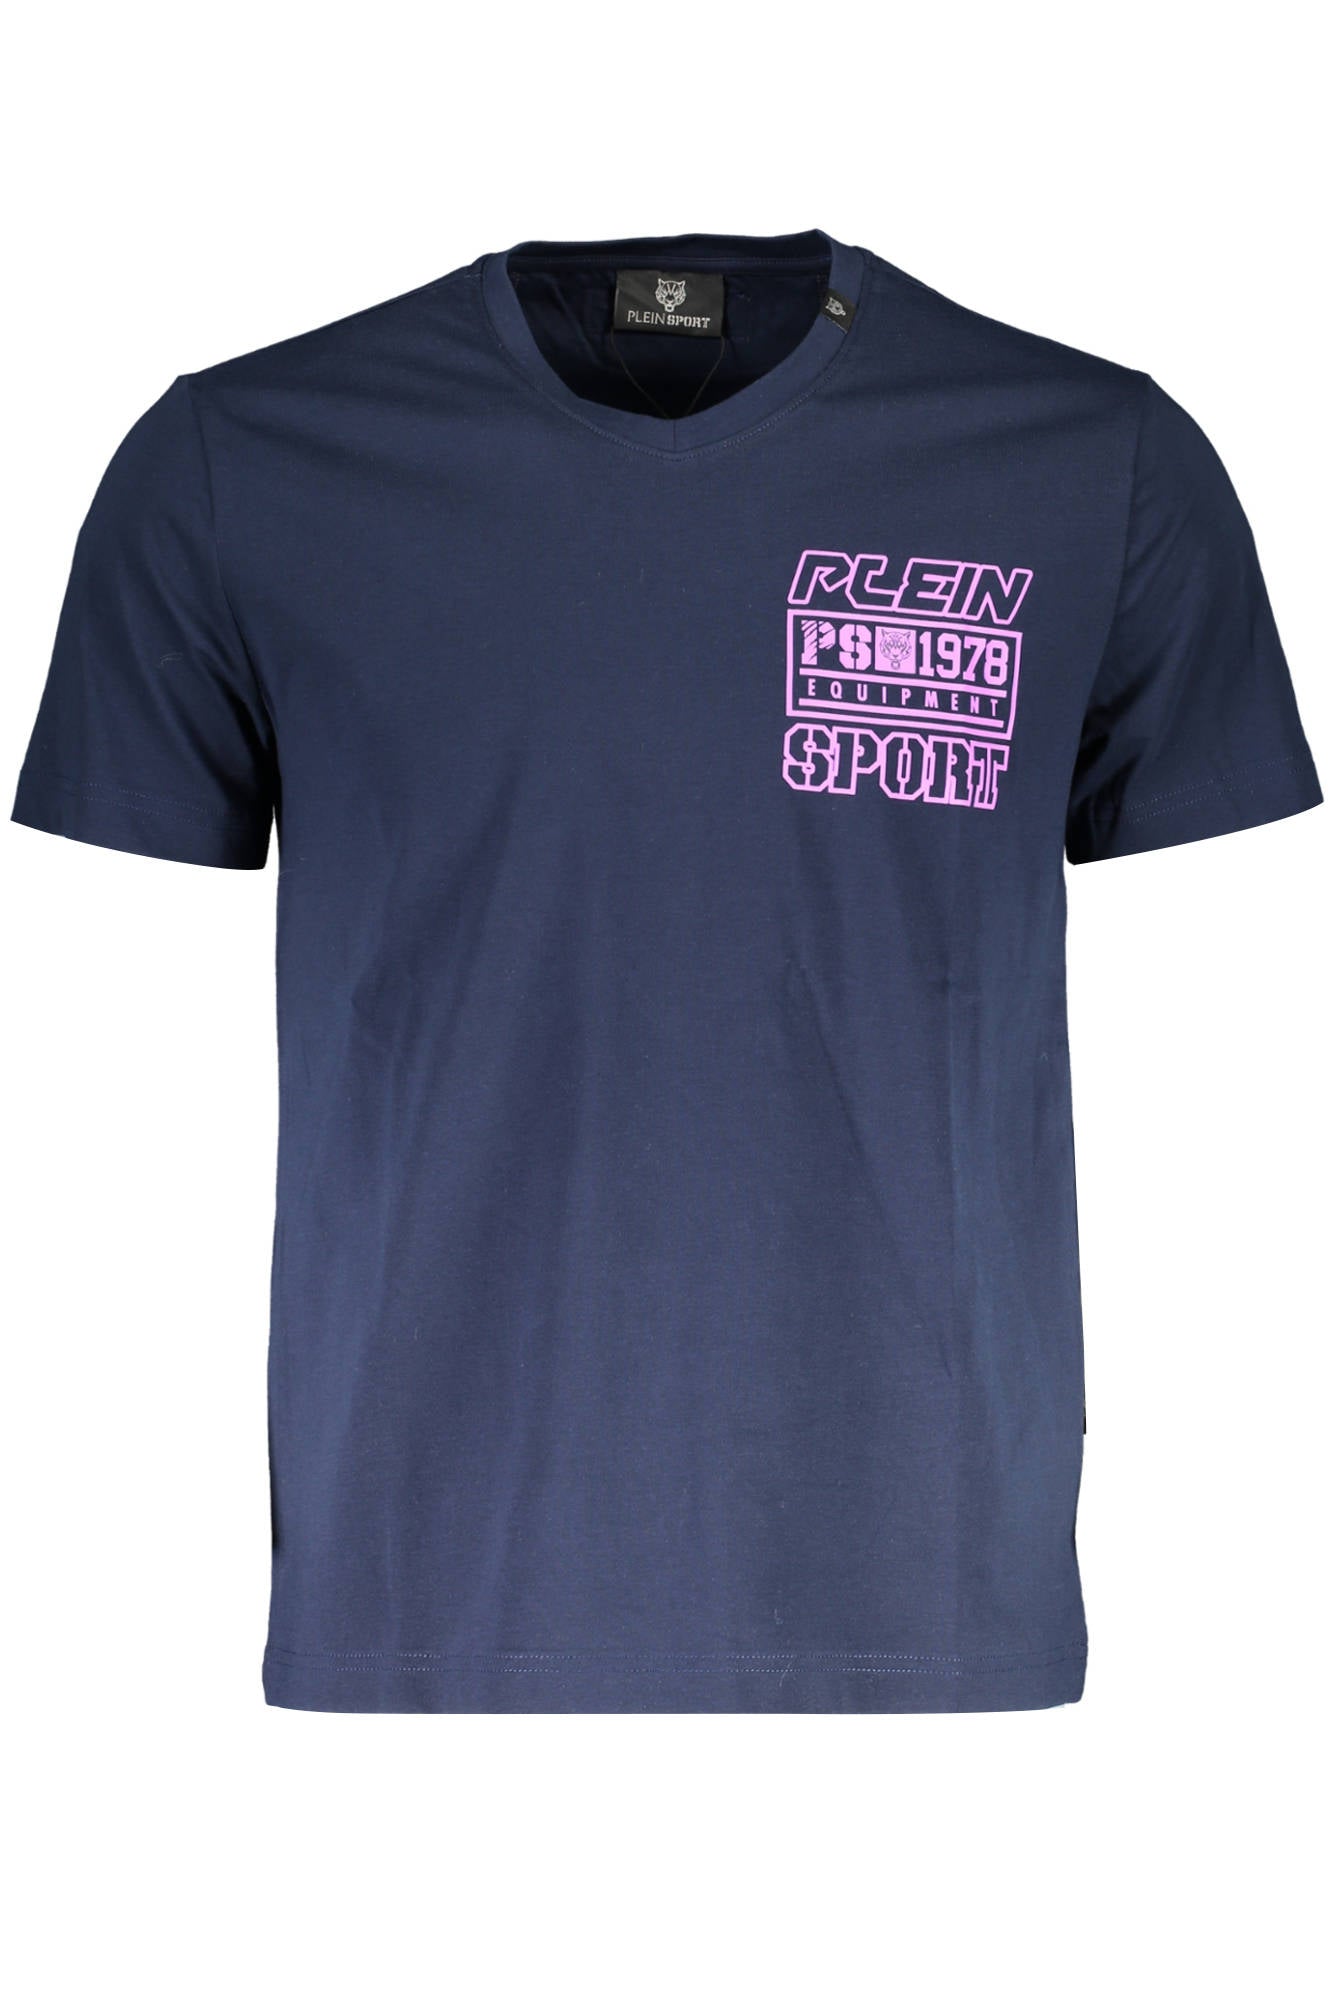 Plein Sport Blue Cotton T-Shirt - Fizigo